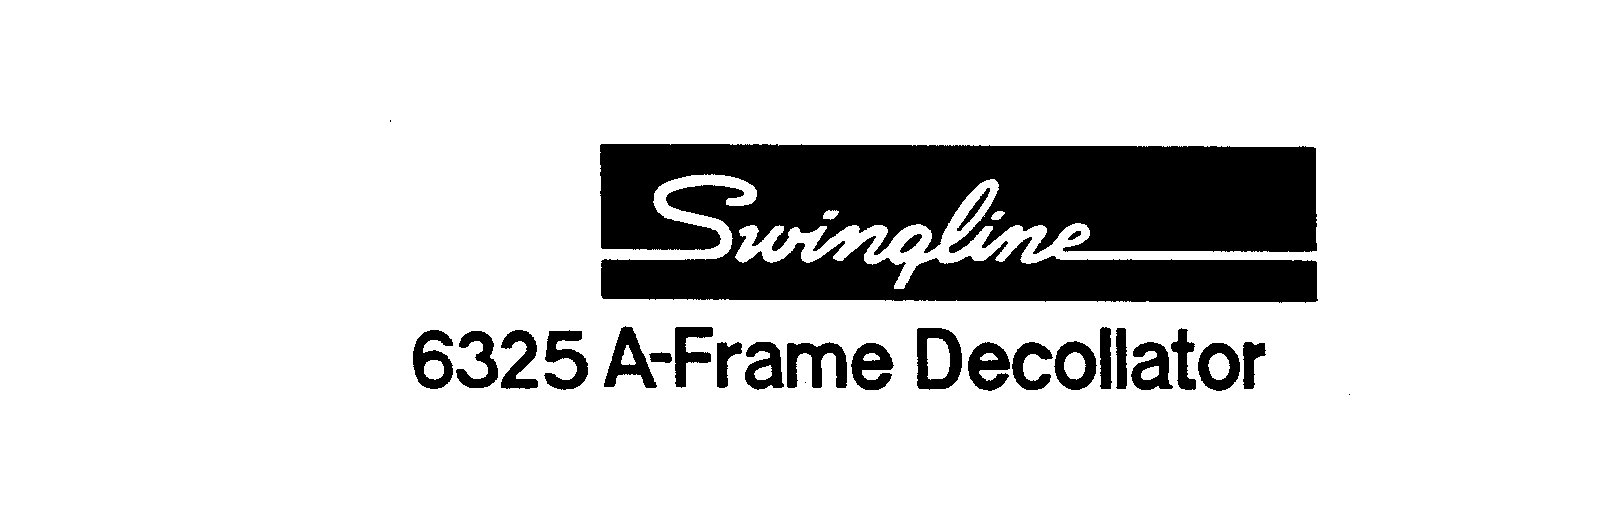  SWINGLINE 6325 A-FRAME DECOLLATOR